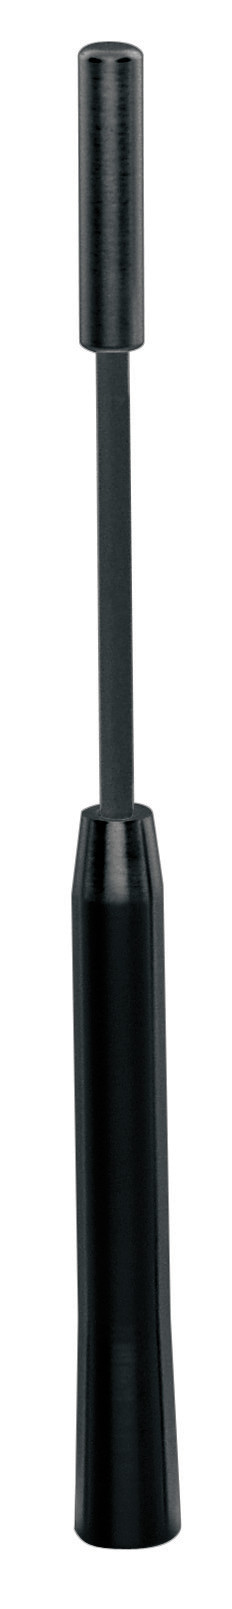 Vergea antena Alu-Tech - Ø 6mm - Negru thumb